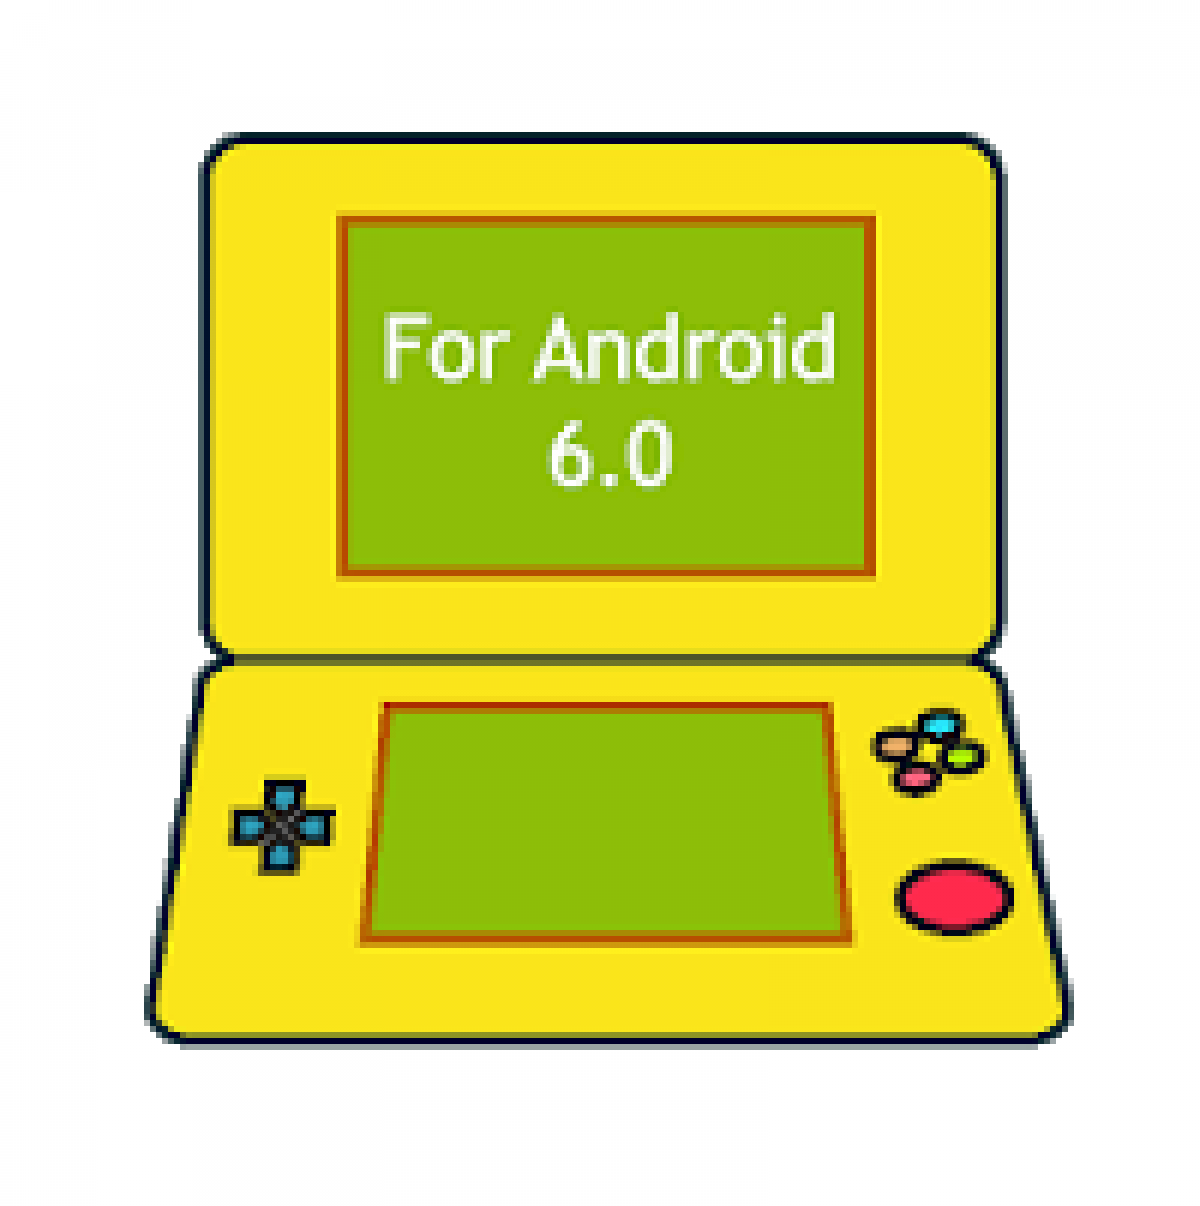 nintendo ds emulator for android installation